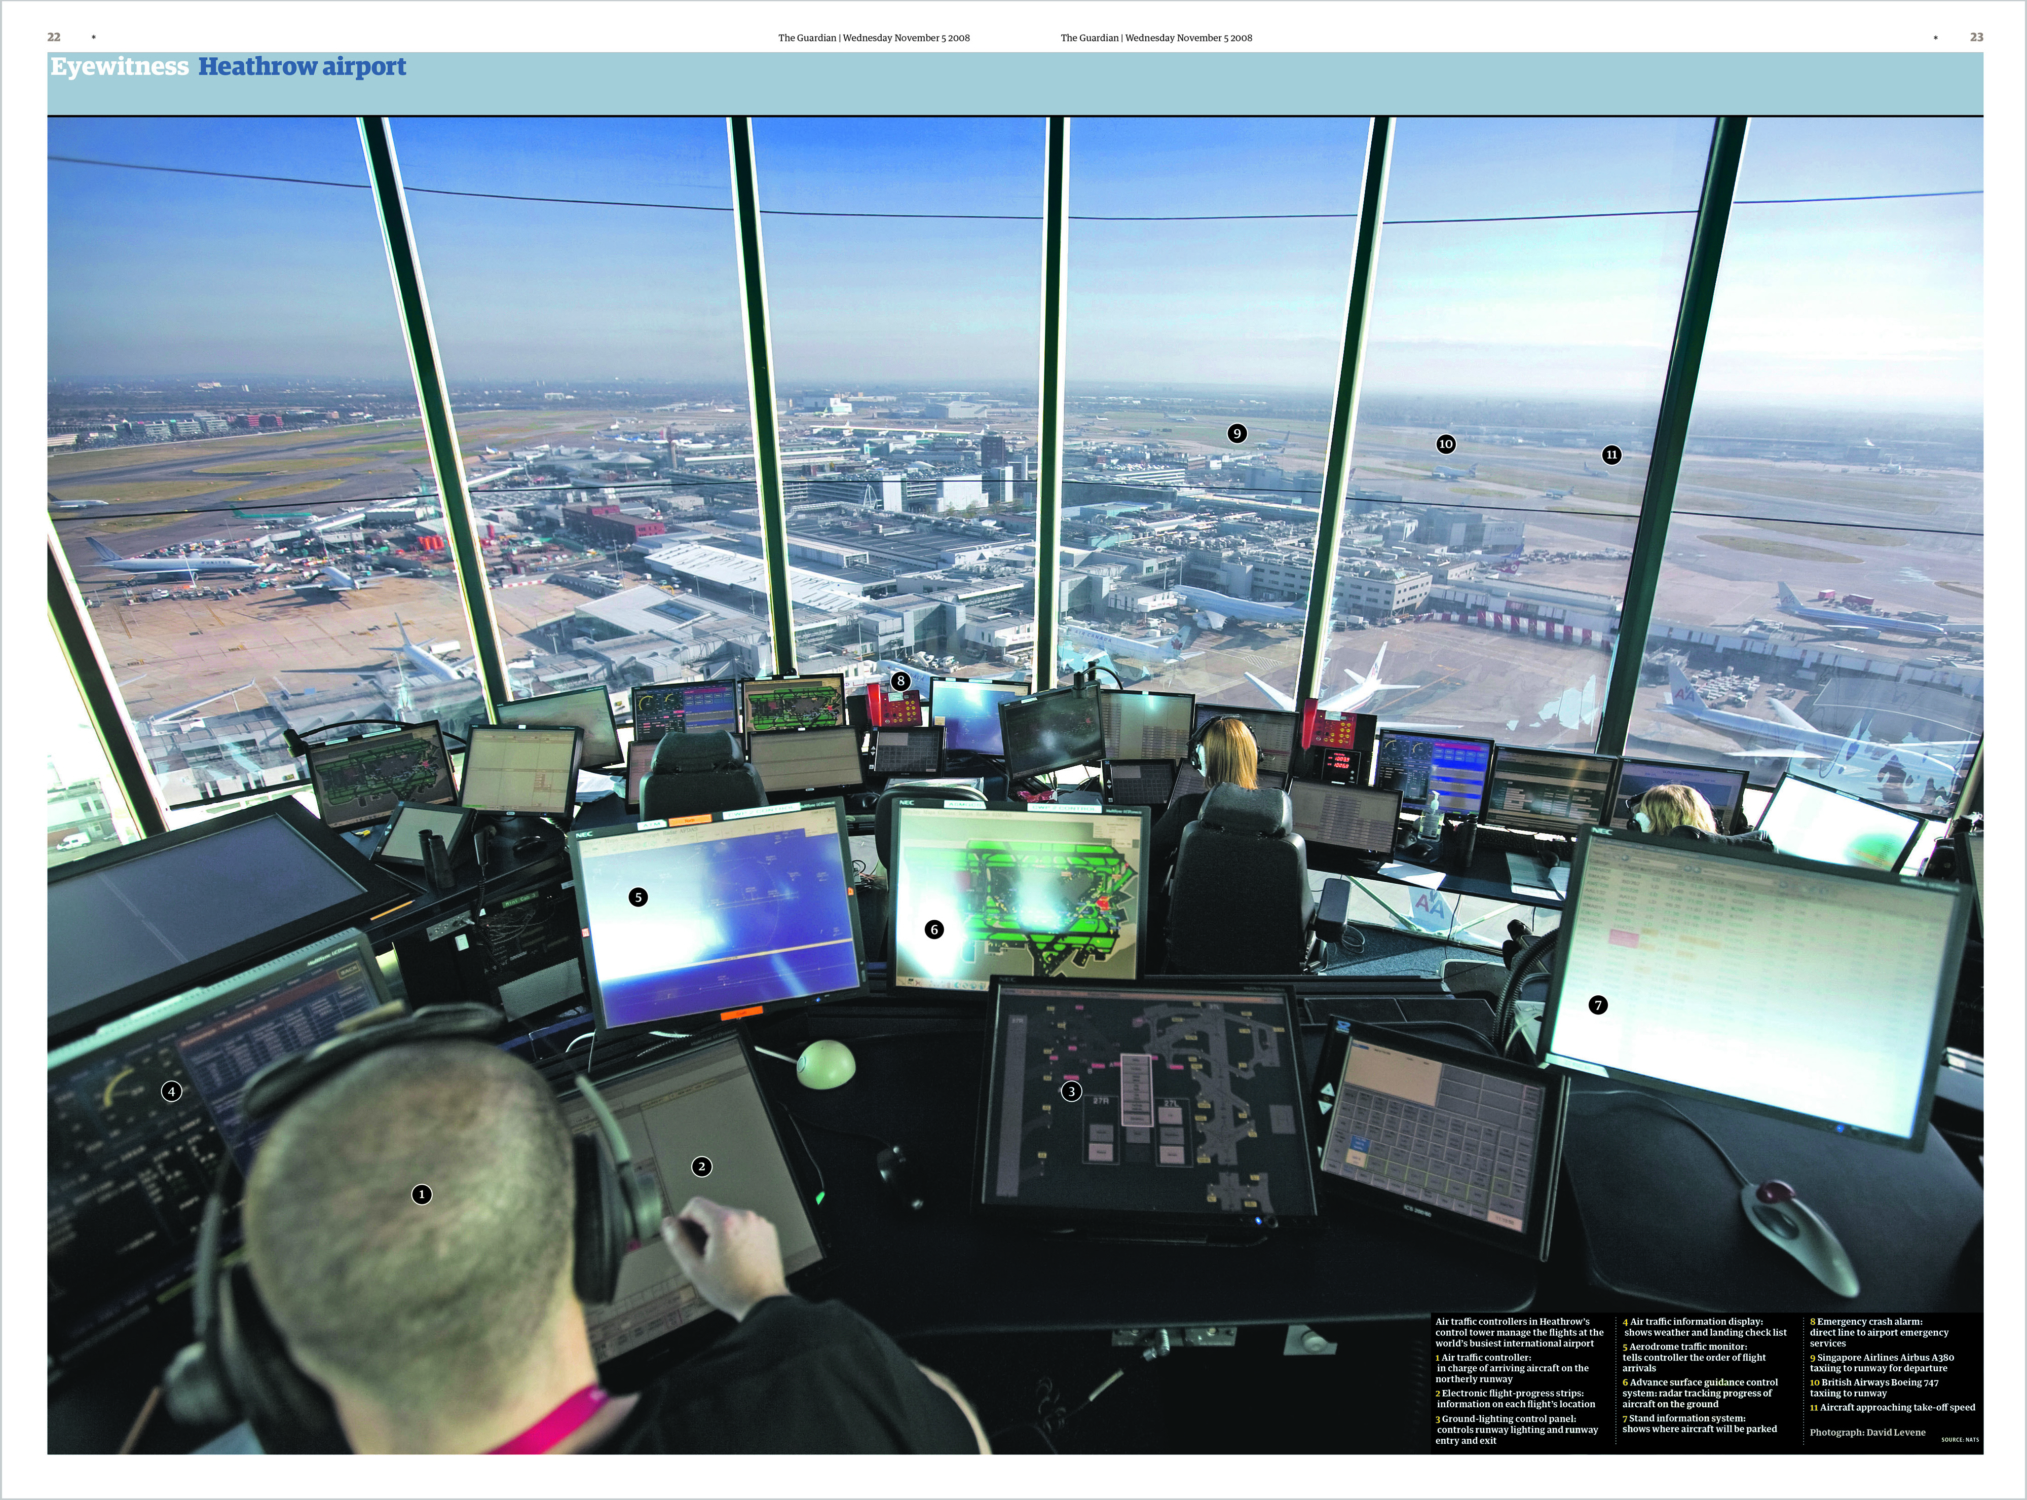 Heathrow control tower, David Levene Photography